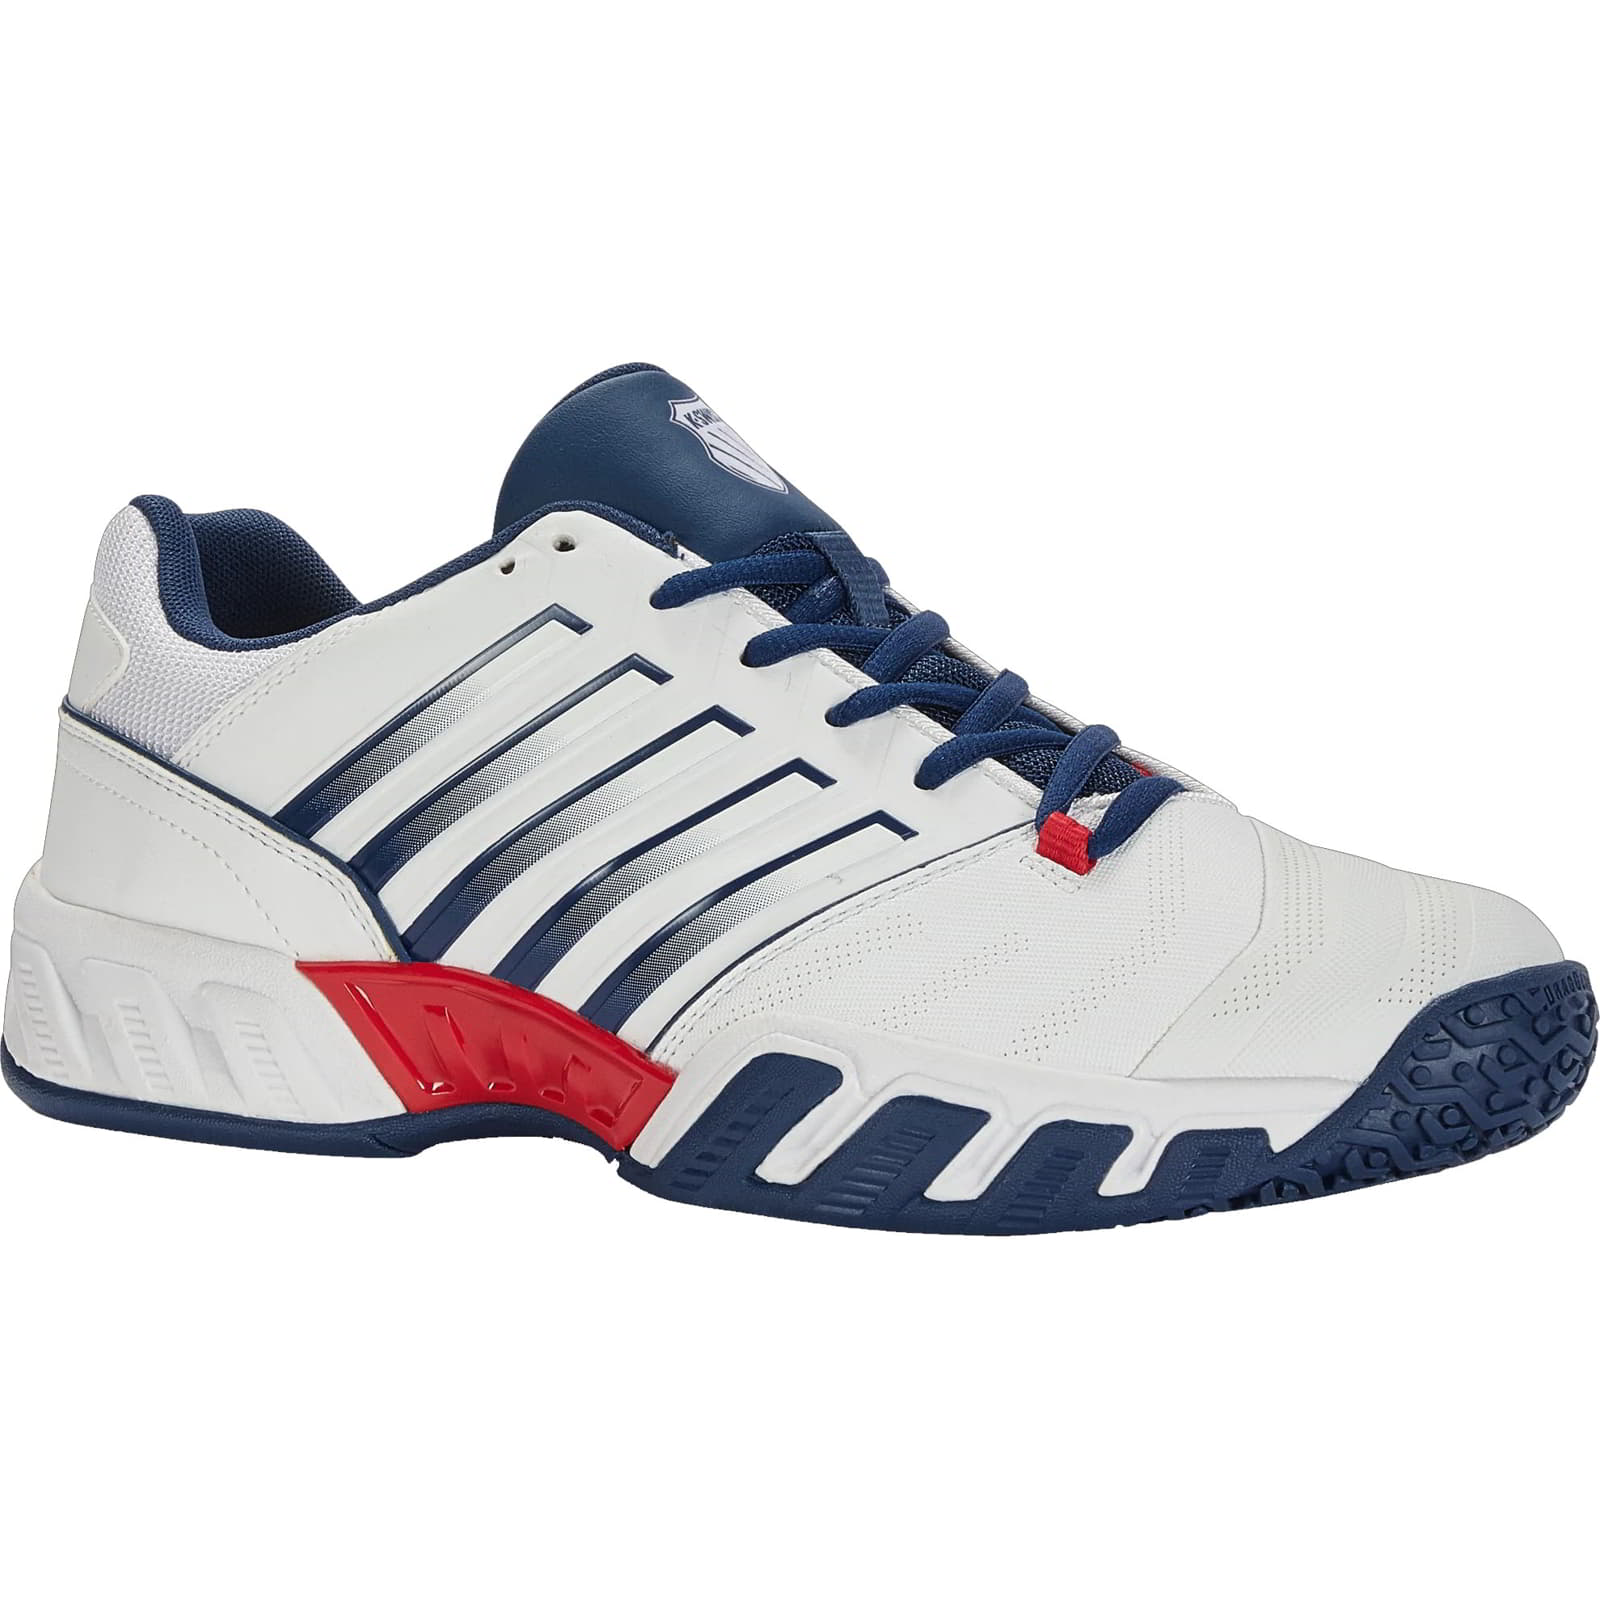 K-Swiss Bigshot Light 4 Omni Tennis Shoes Trainers - UK 8.5